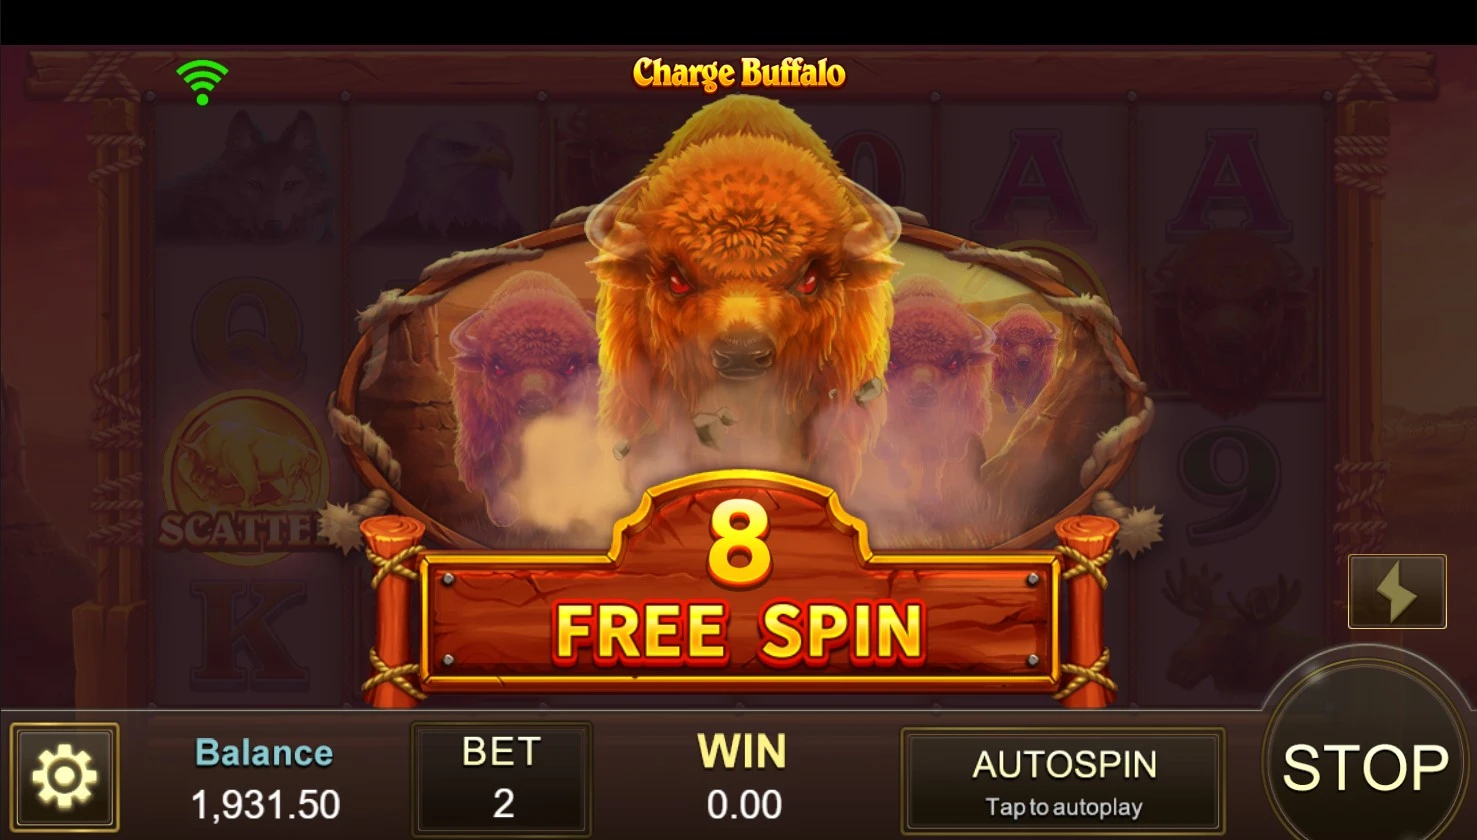 Charge Buffalo 8 free spin | Jili Slot Games | Slot Online | Nustabet Online Casino